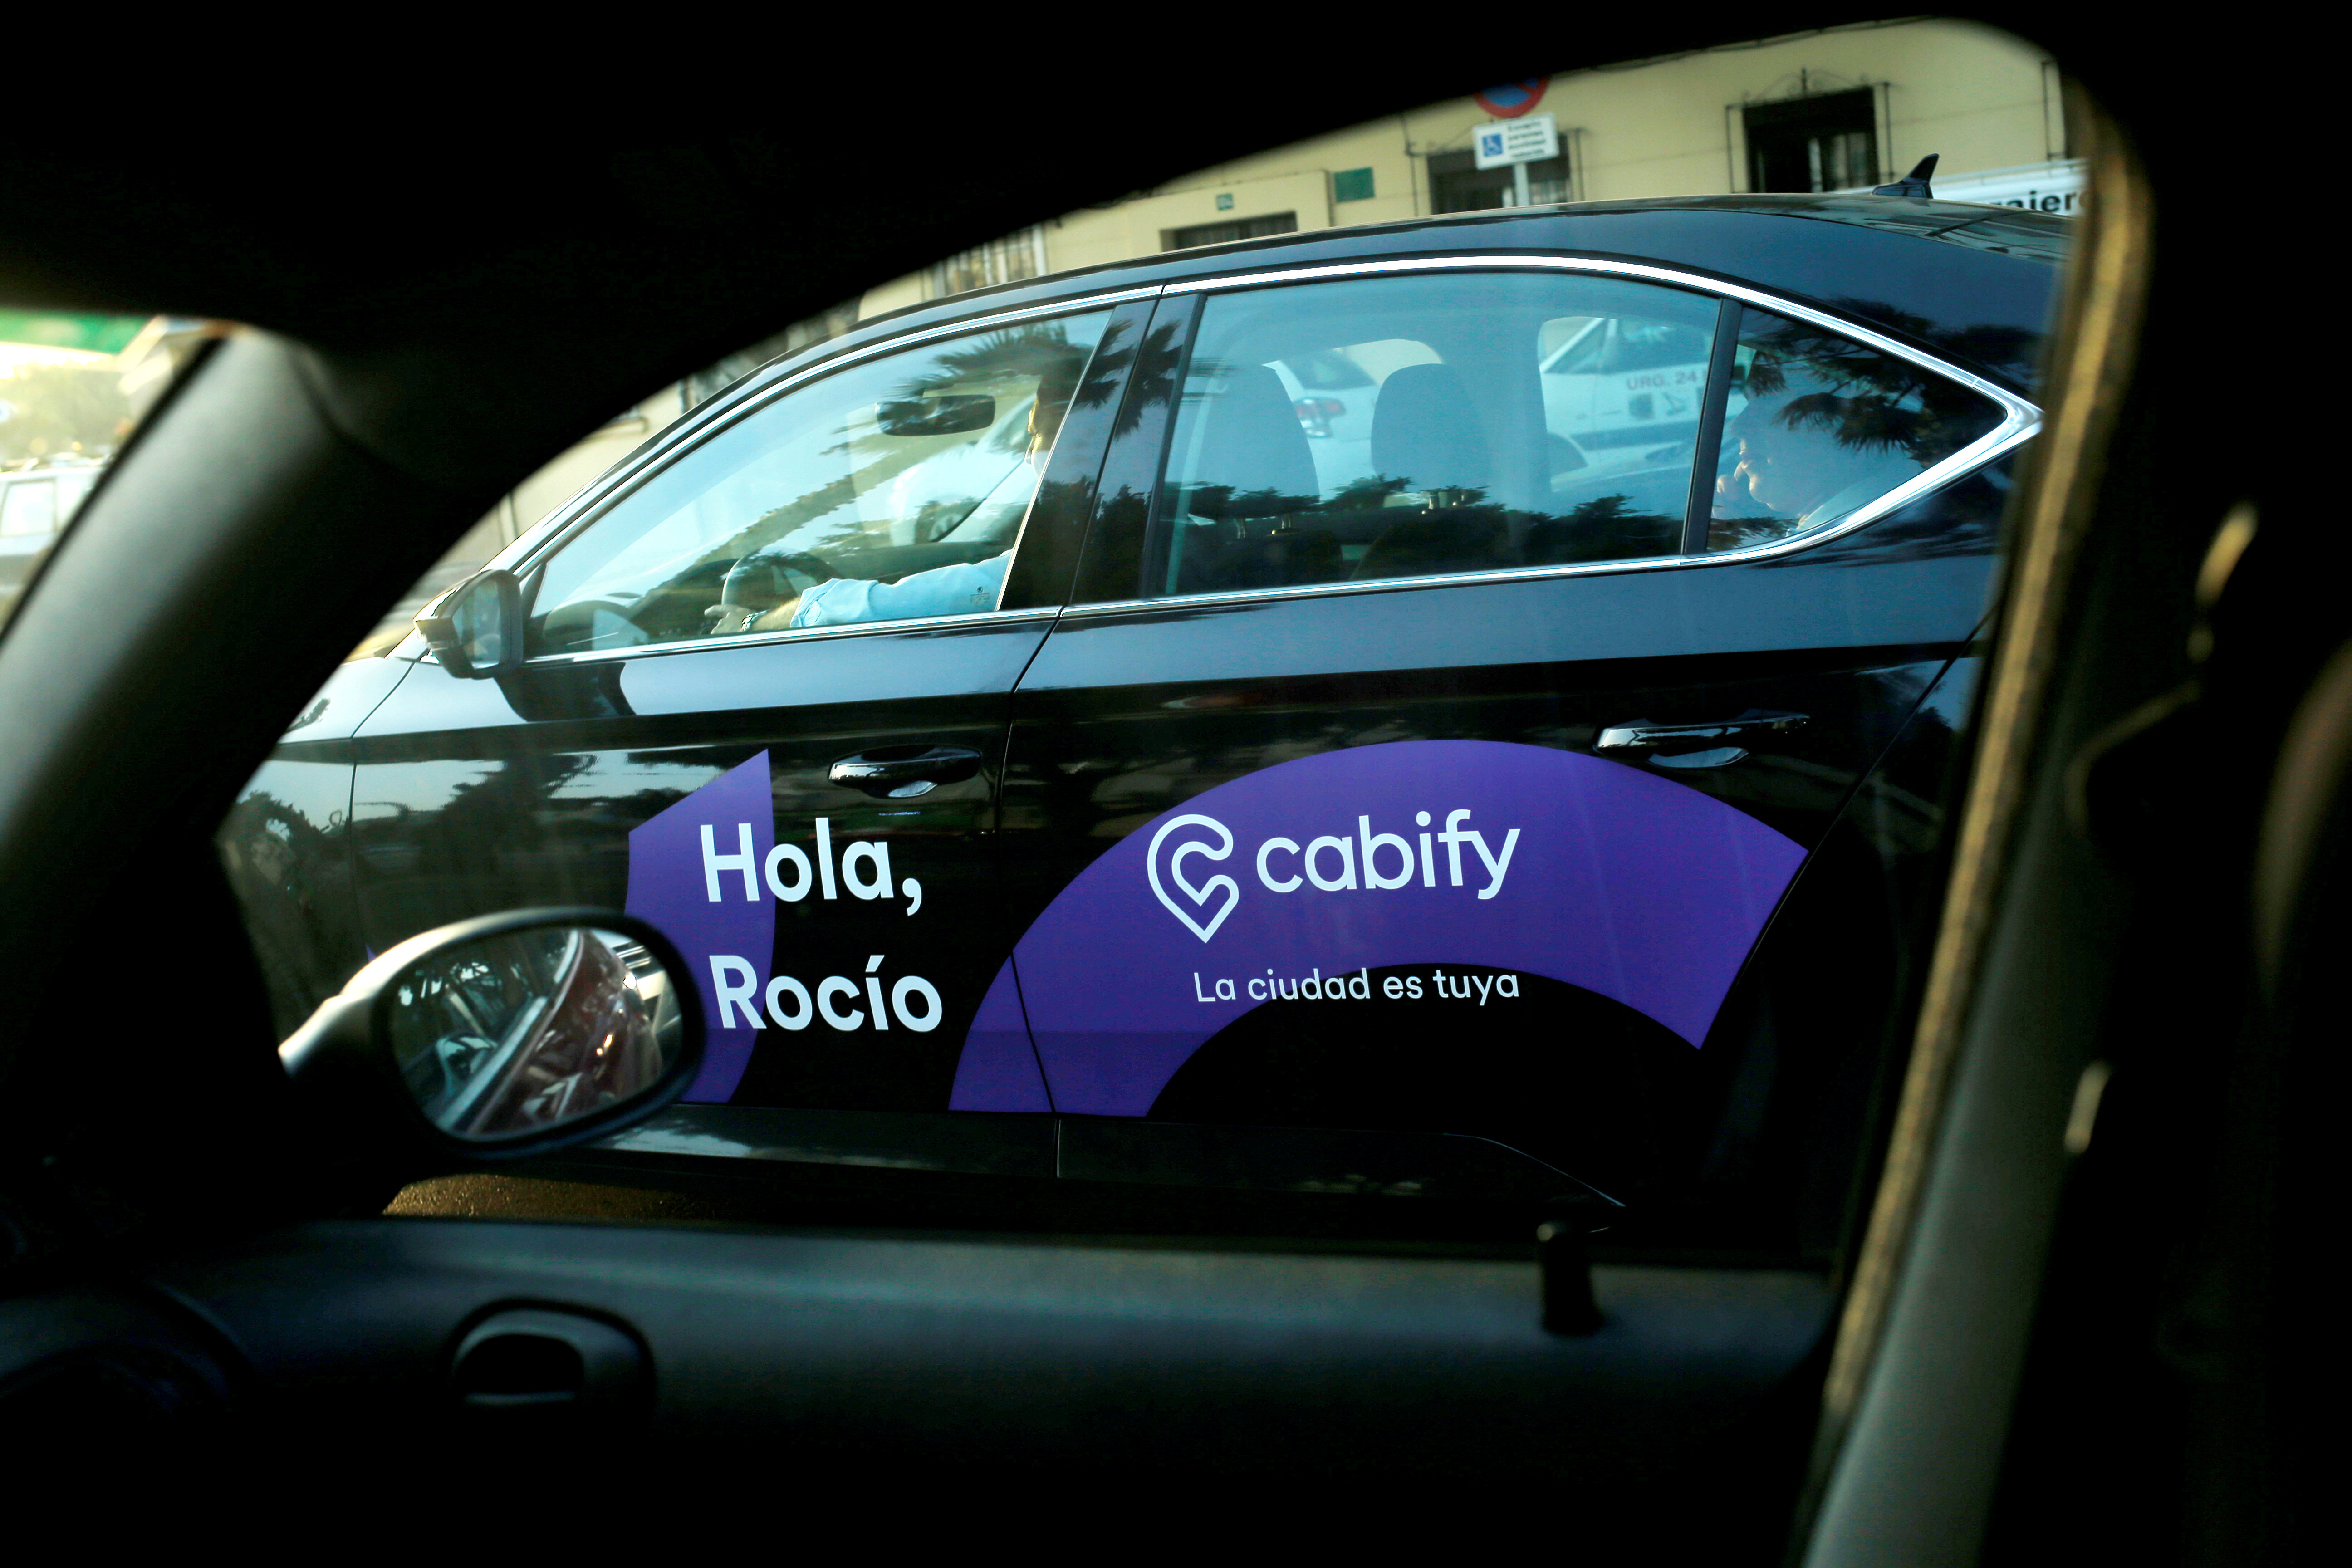 A Cabify taxi car is seen through the window of a car in Malaga